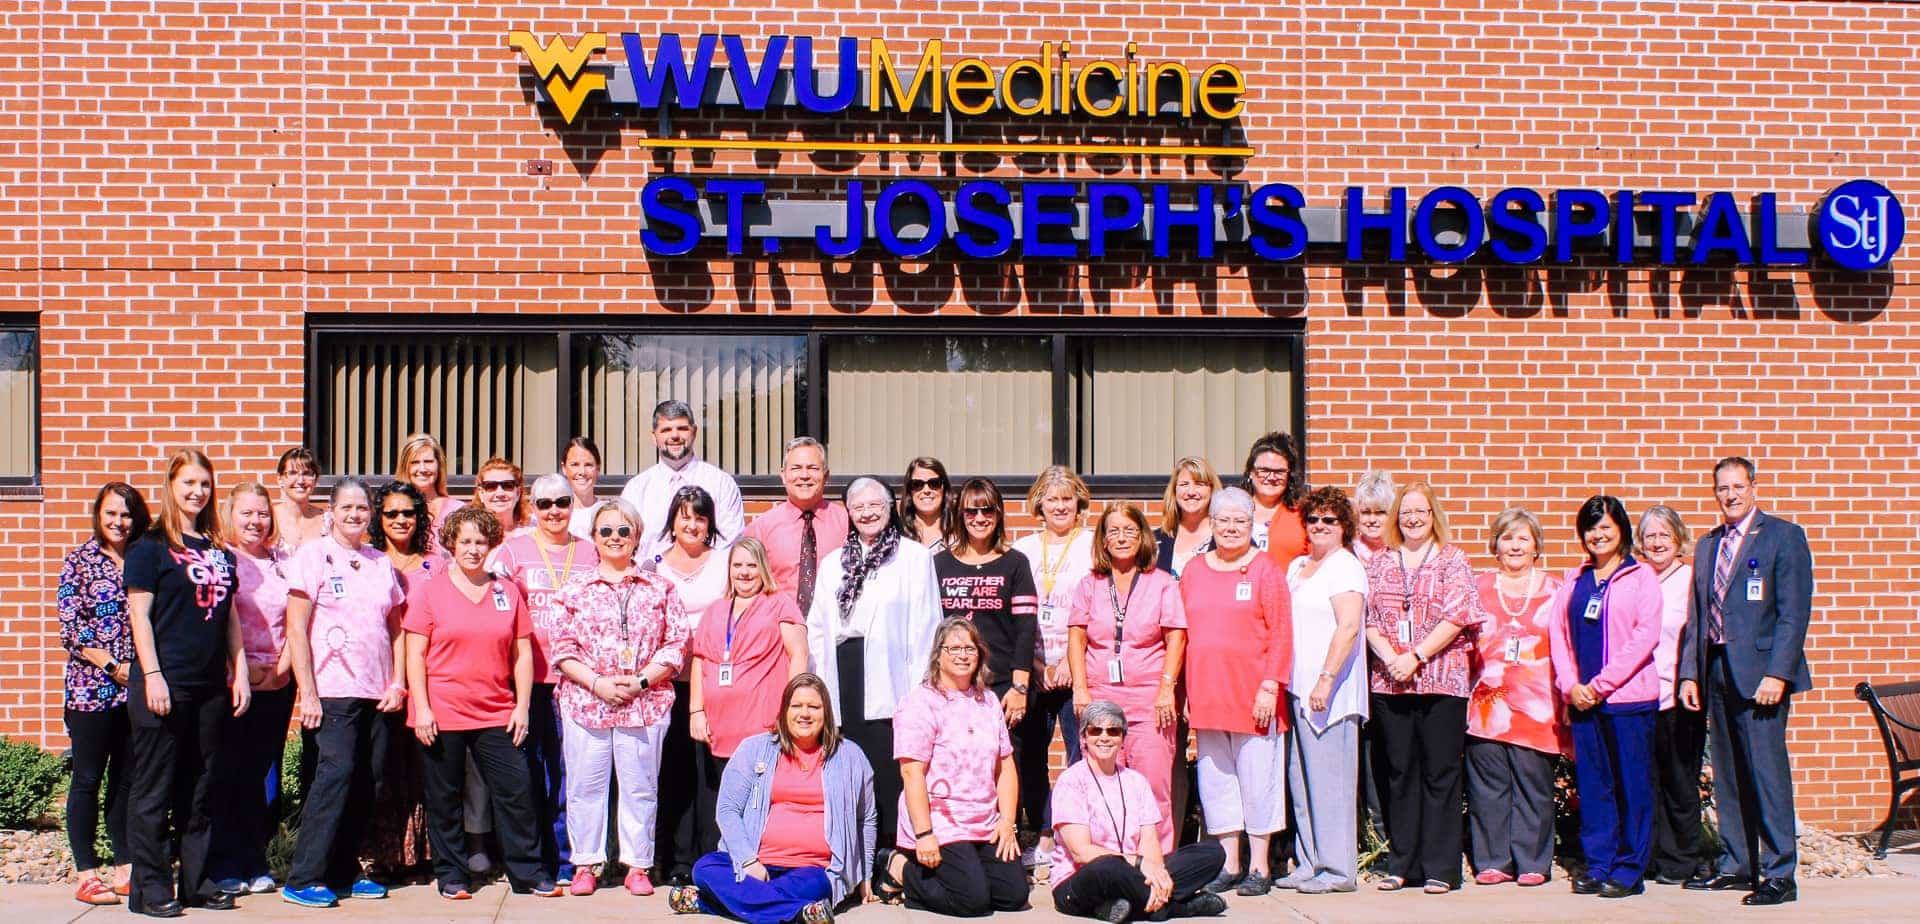 St. Joseph's Staff Celebrates Breast Cancer Awareness Month